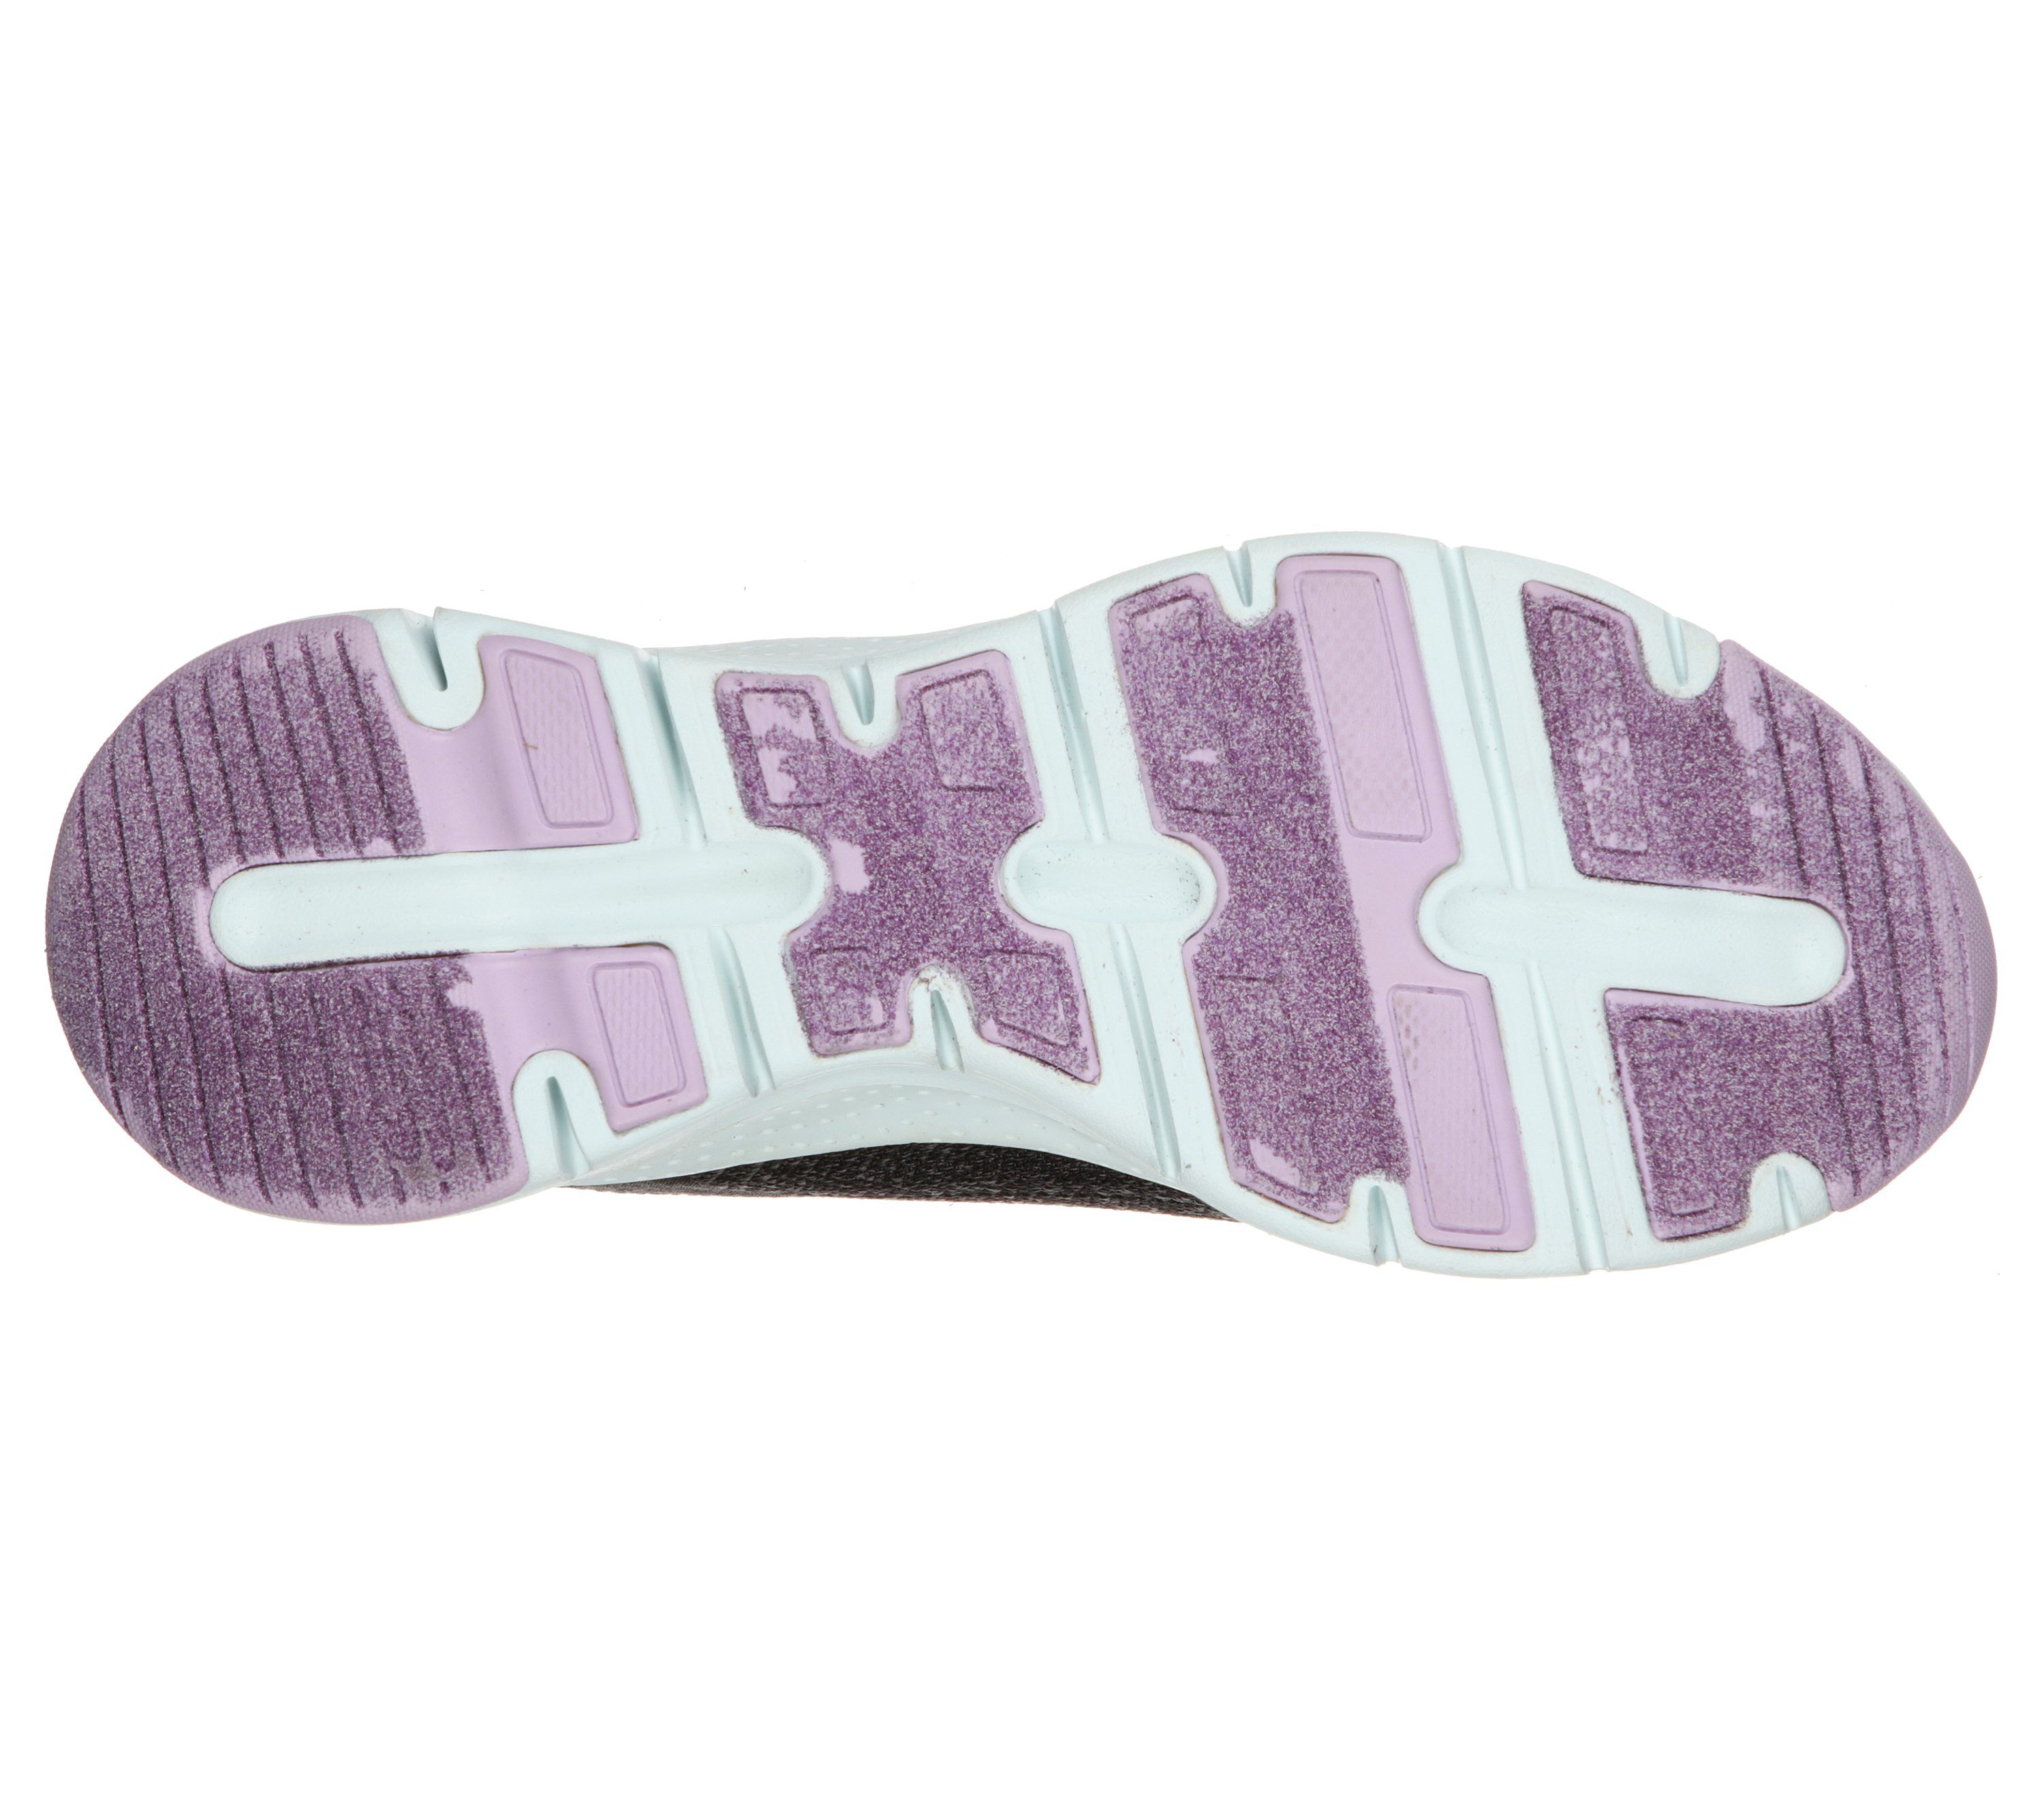 Skechers Arch Fit - Comfy Wave - Black / Violet Textile